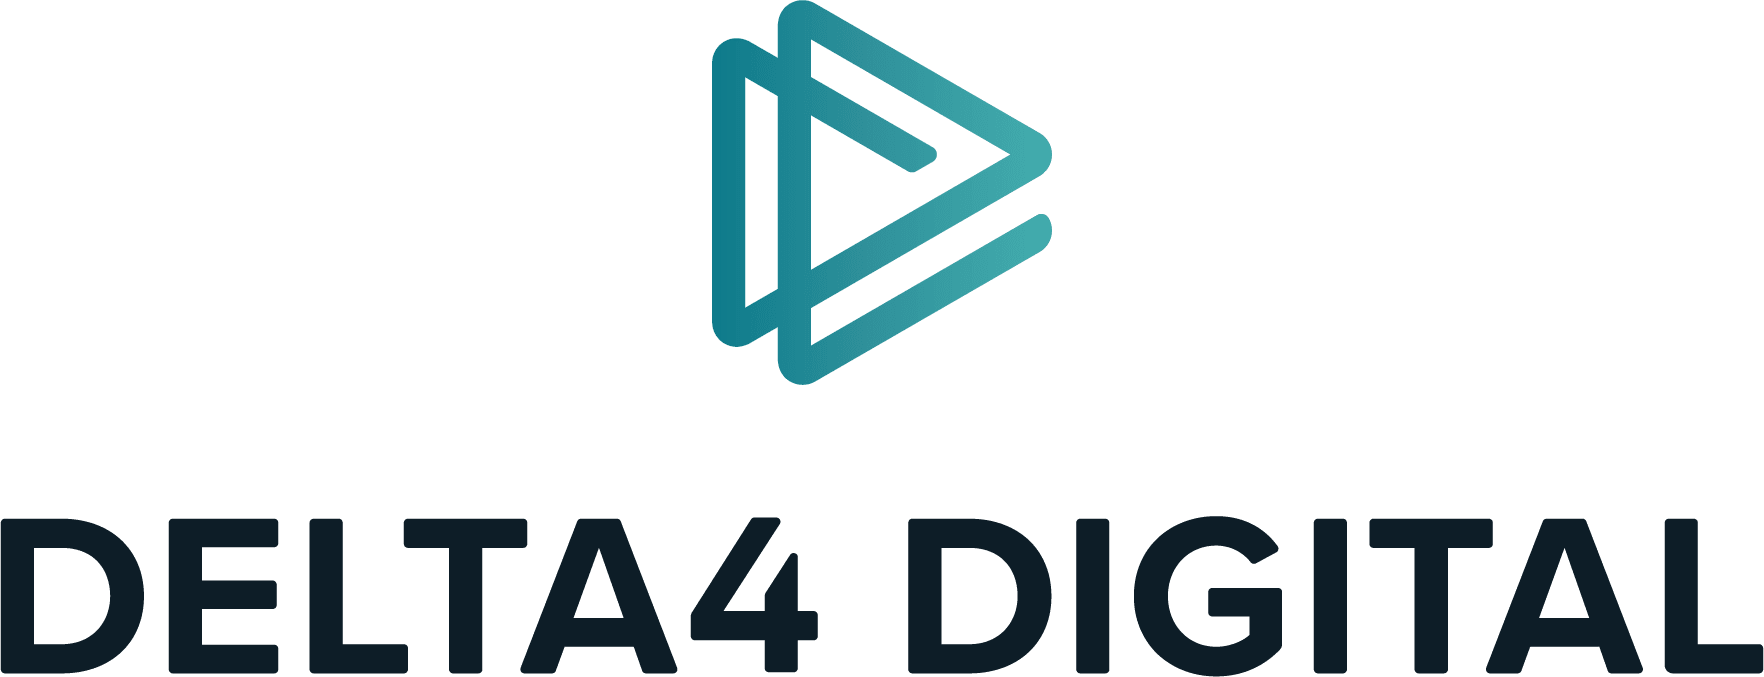 Delta4 Digital Website, Luce Initiative Sponsor